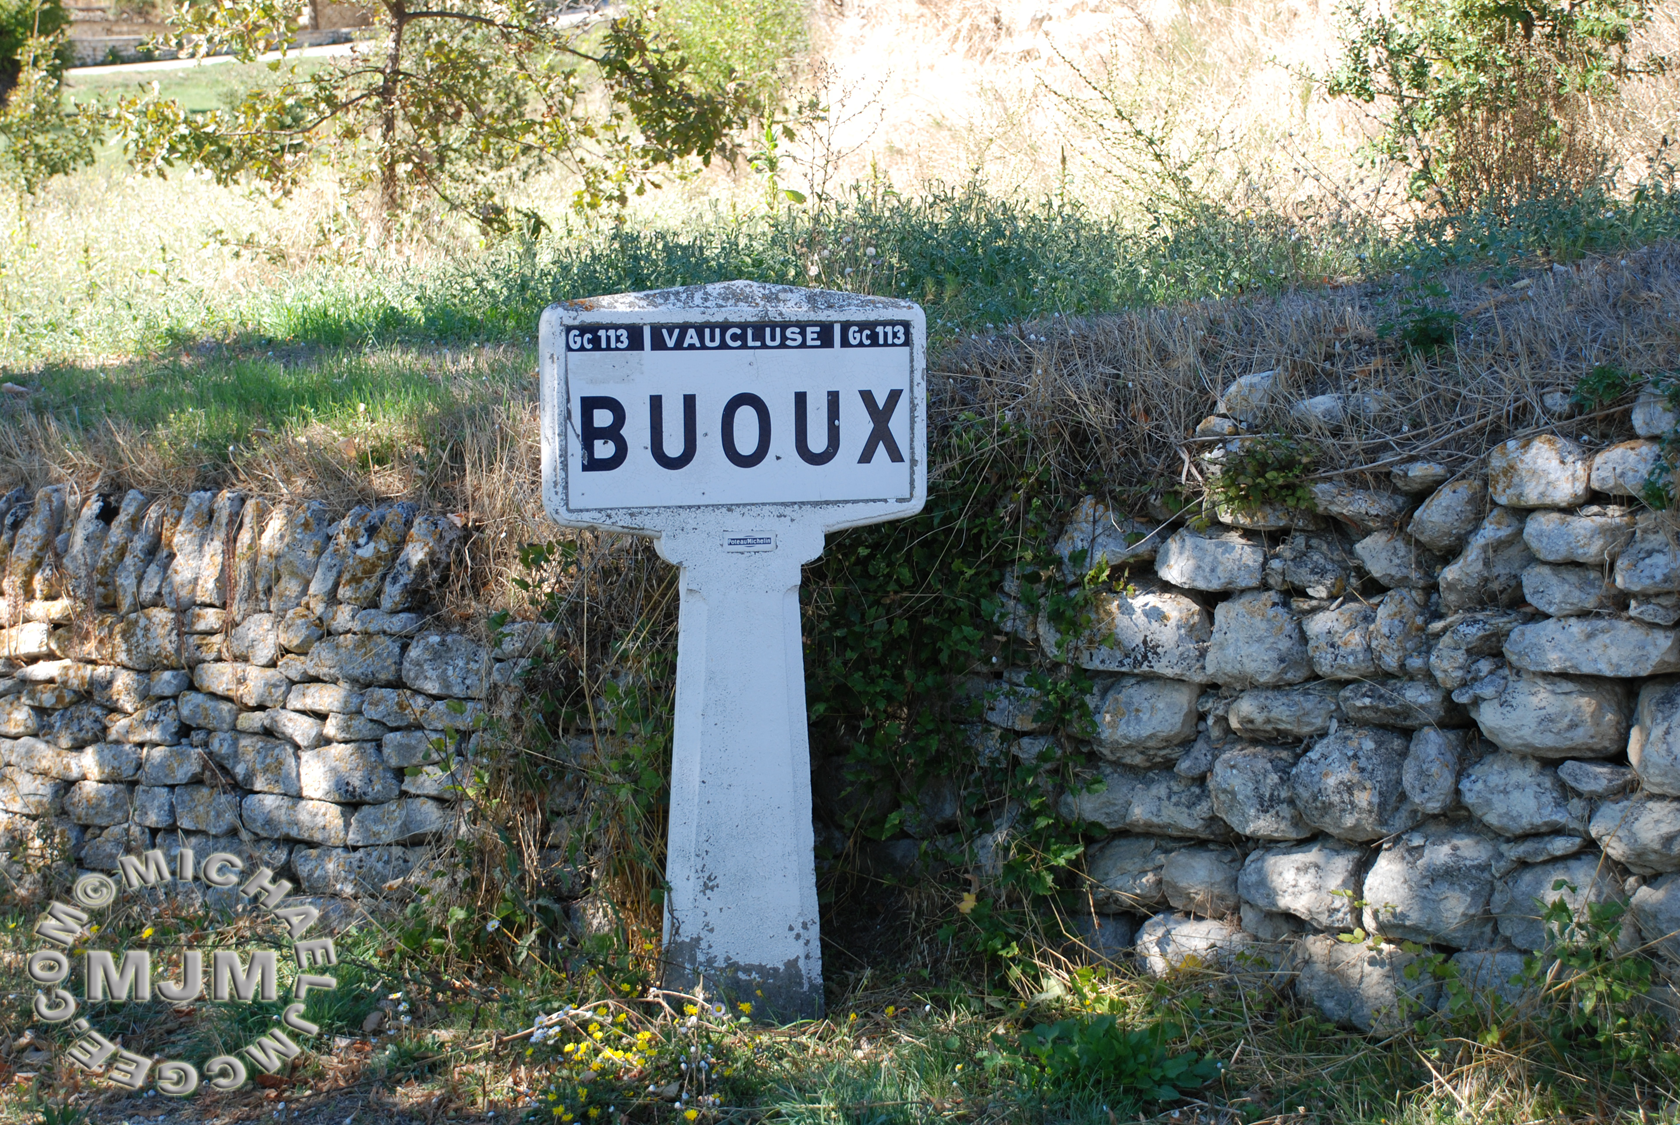 Buoux France / michaeljmcgee.com